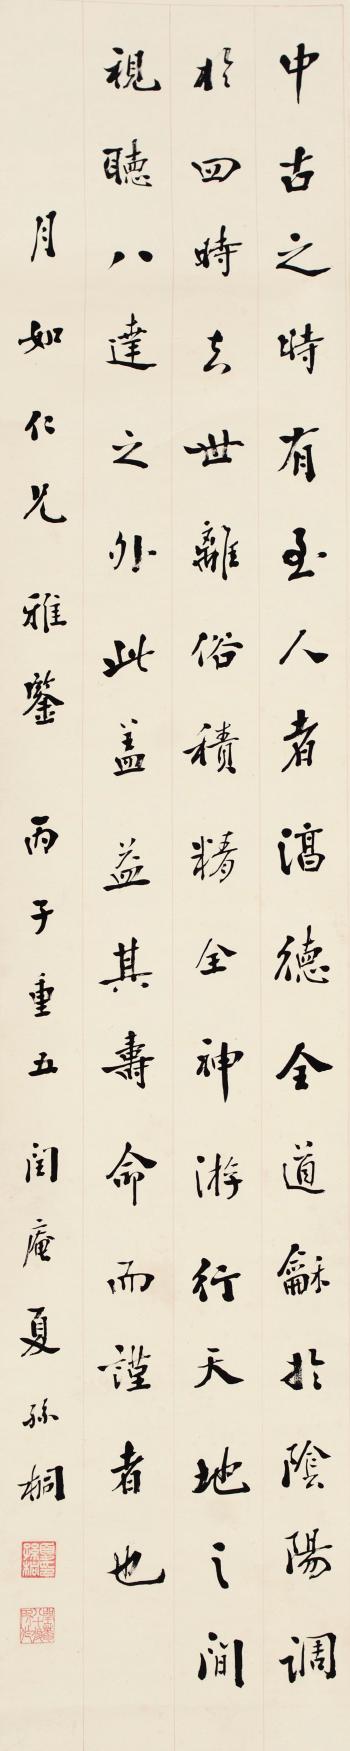 Calligraphy by 
																	 Xia Suntong